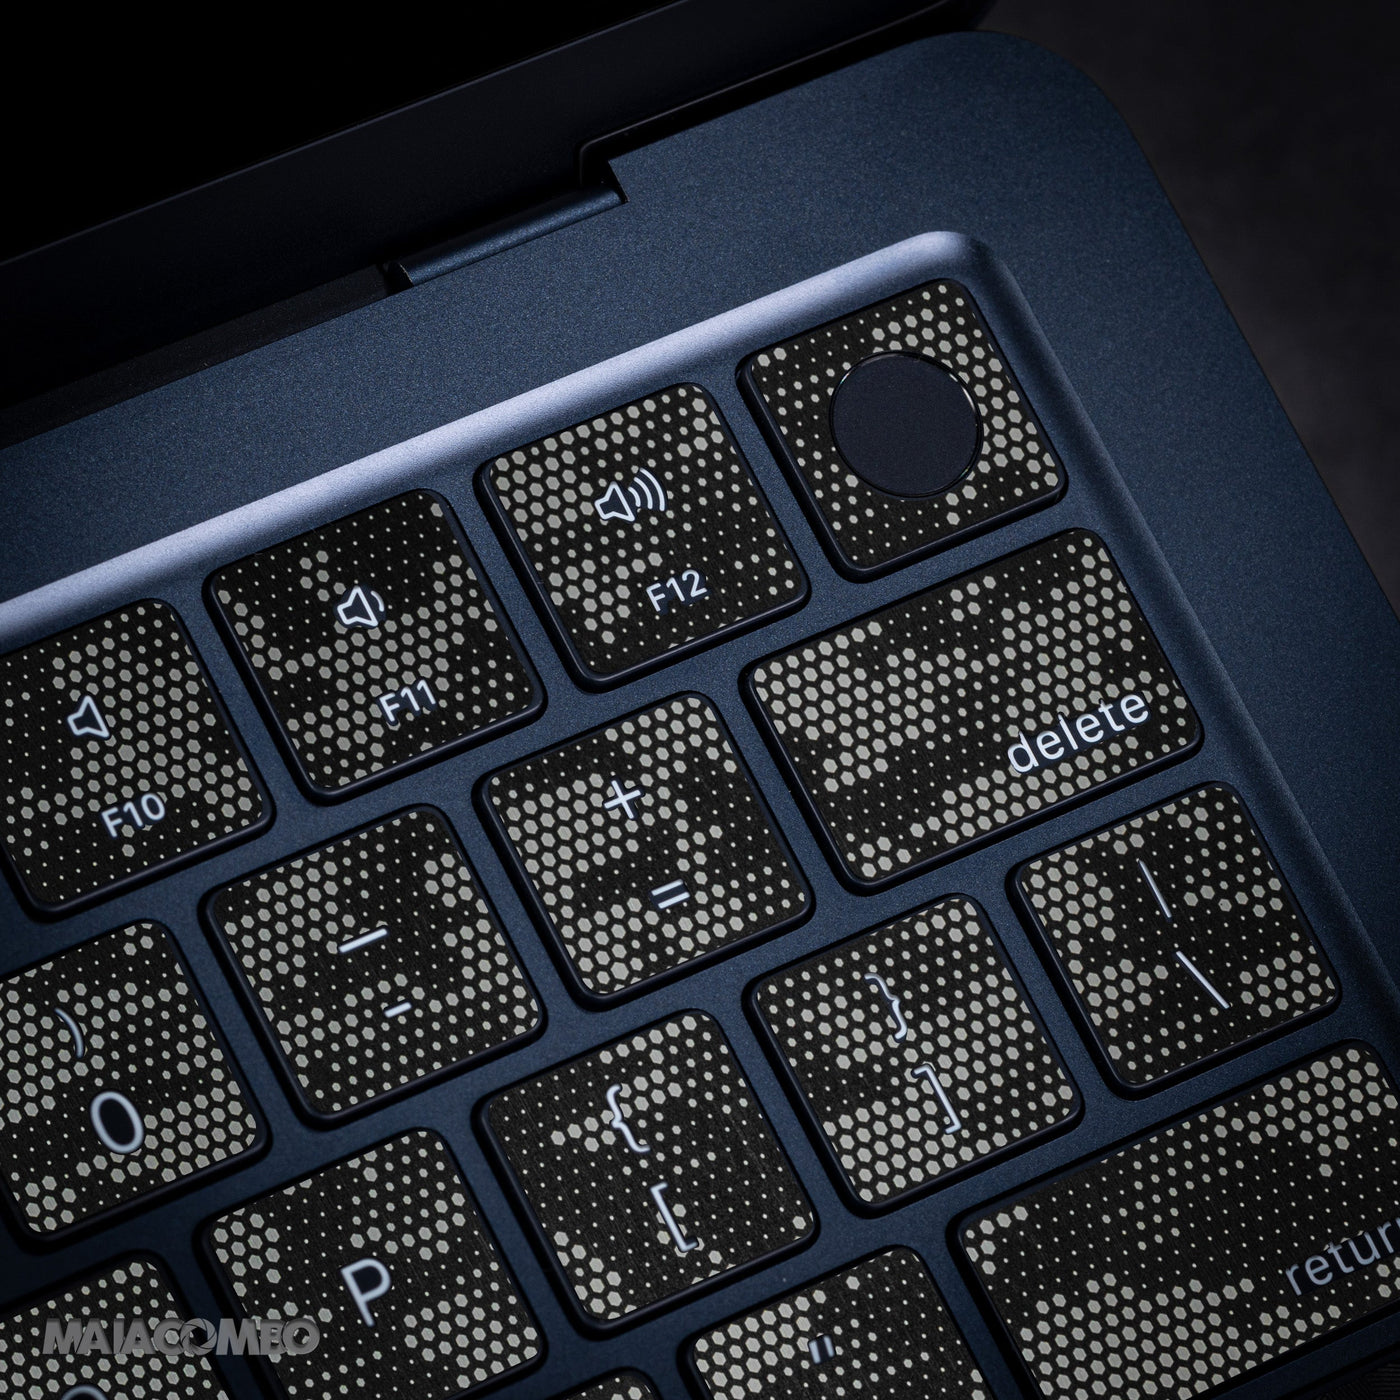 Macbook Pro Keyboard US Layout Skin/ Wrap